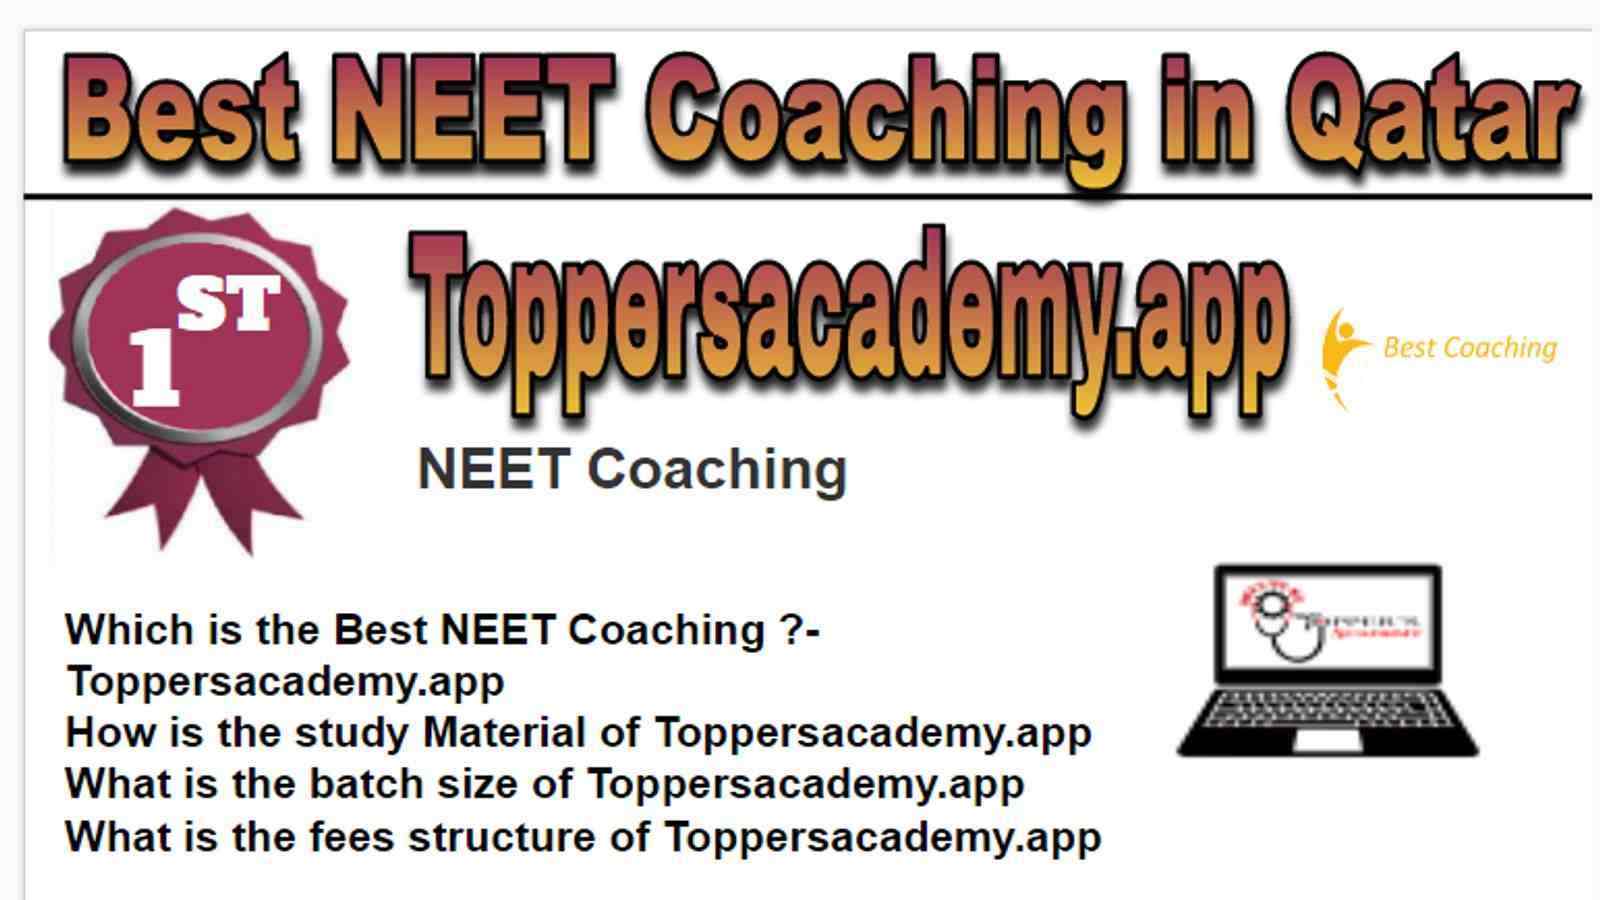 Rank 1 Best NEET Coaching in Qatar